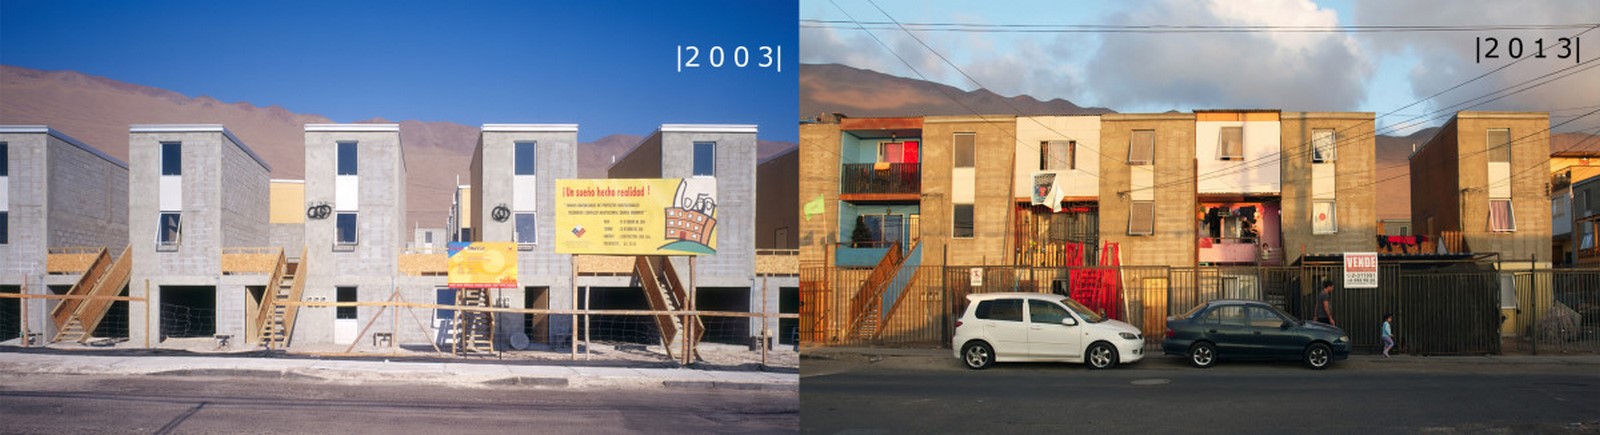 Quinta Monroy, Chile by Alejandro Aravena: Architectre for social impact- Sheet4